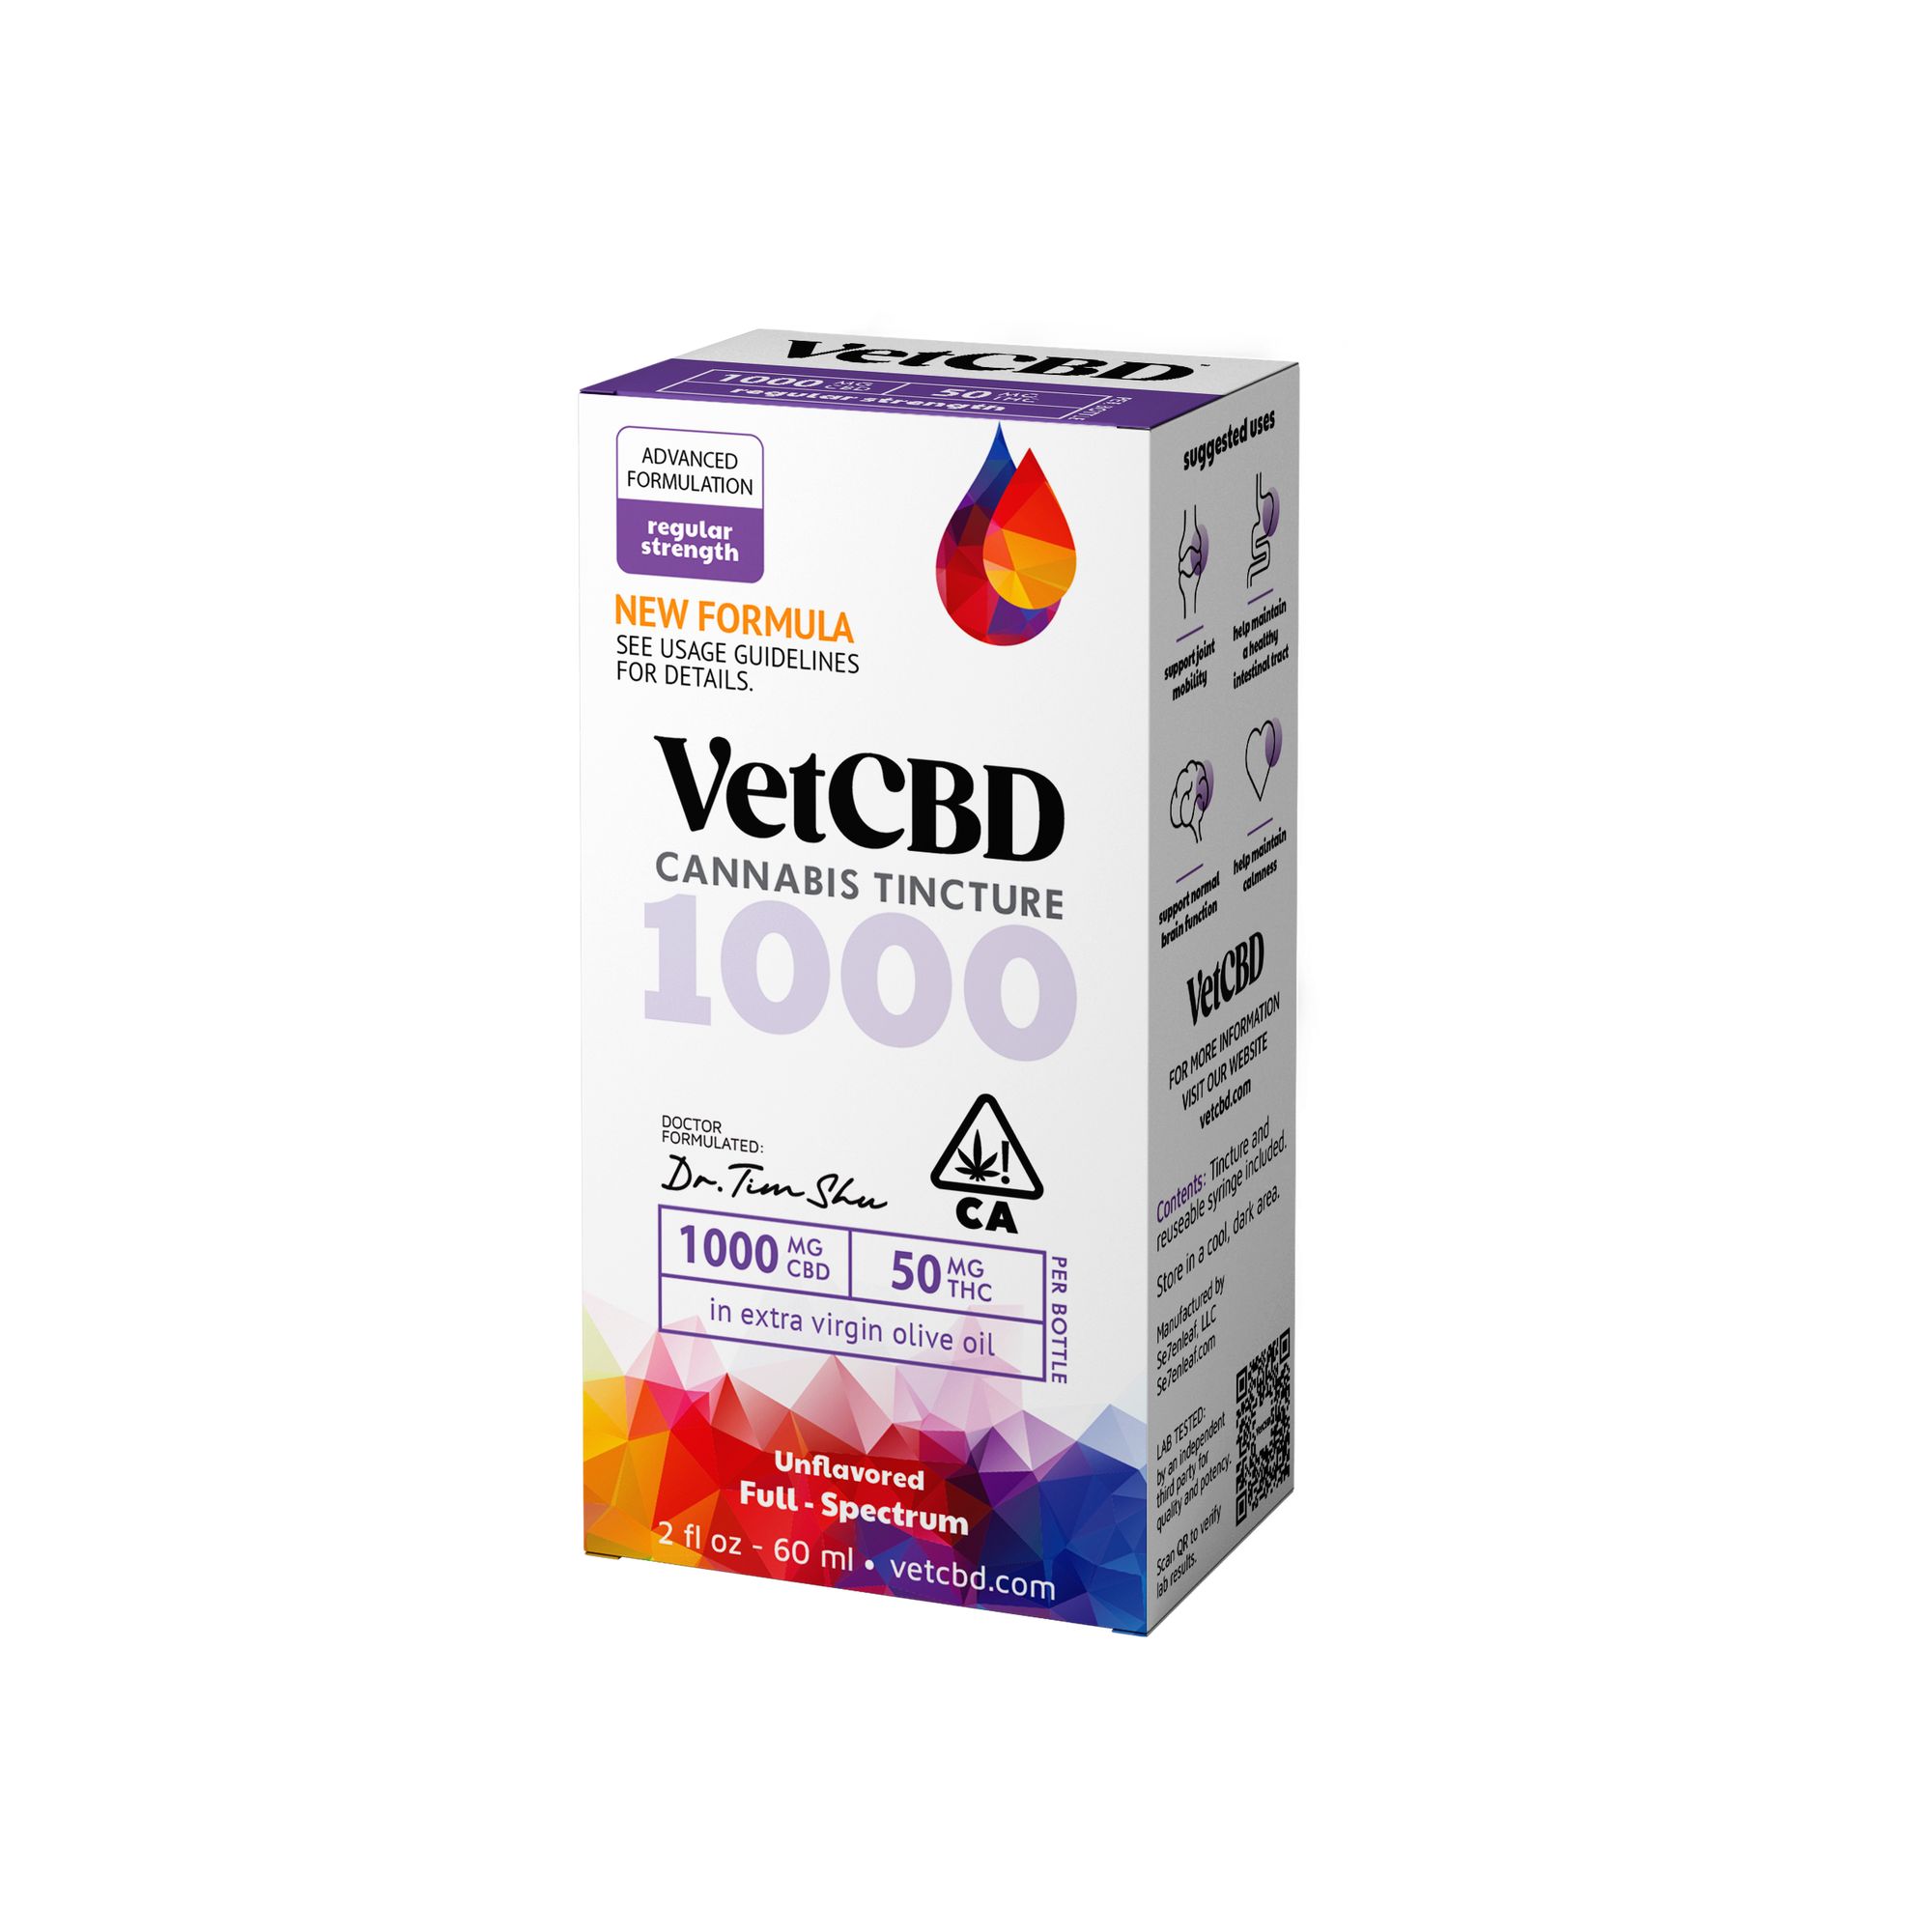 VetCBD, Reg Strength Cannabis Tincture, 1000mg, 2oz